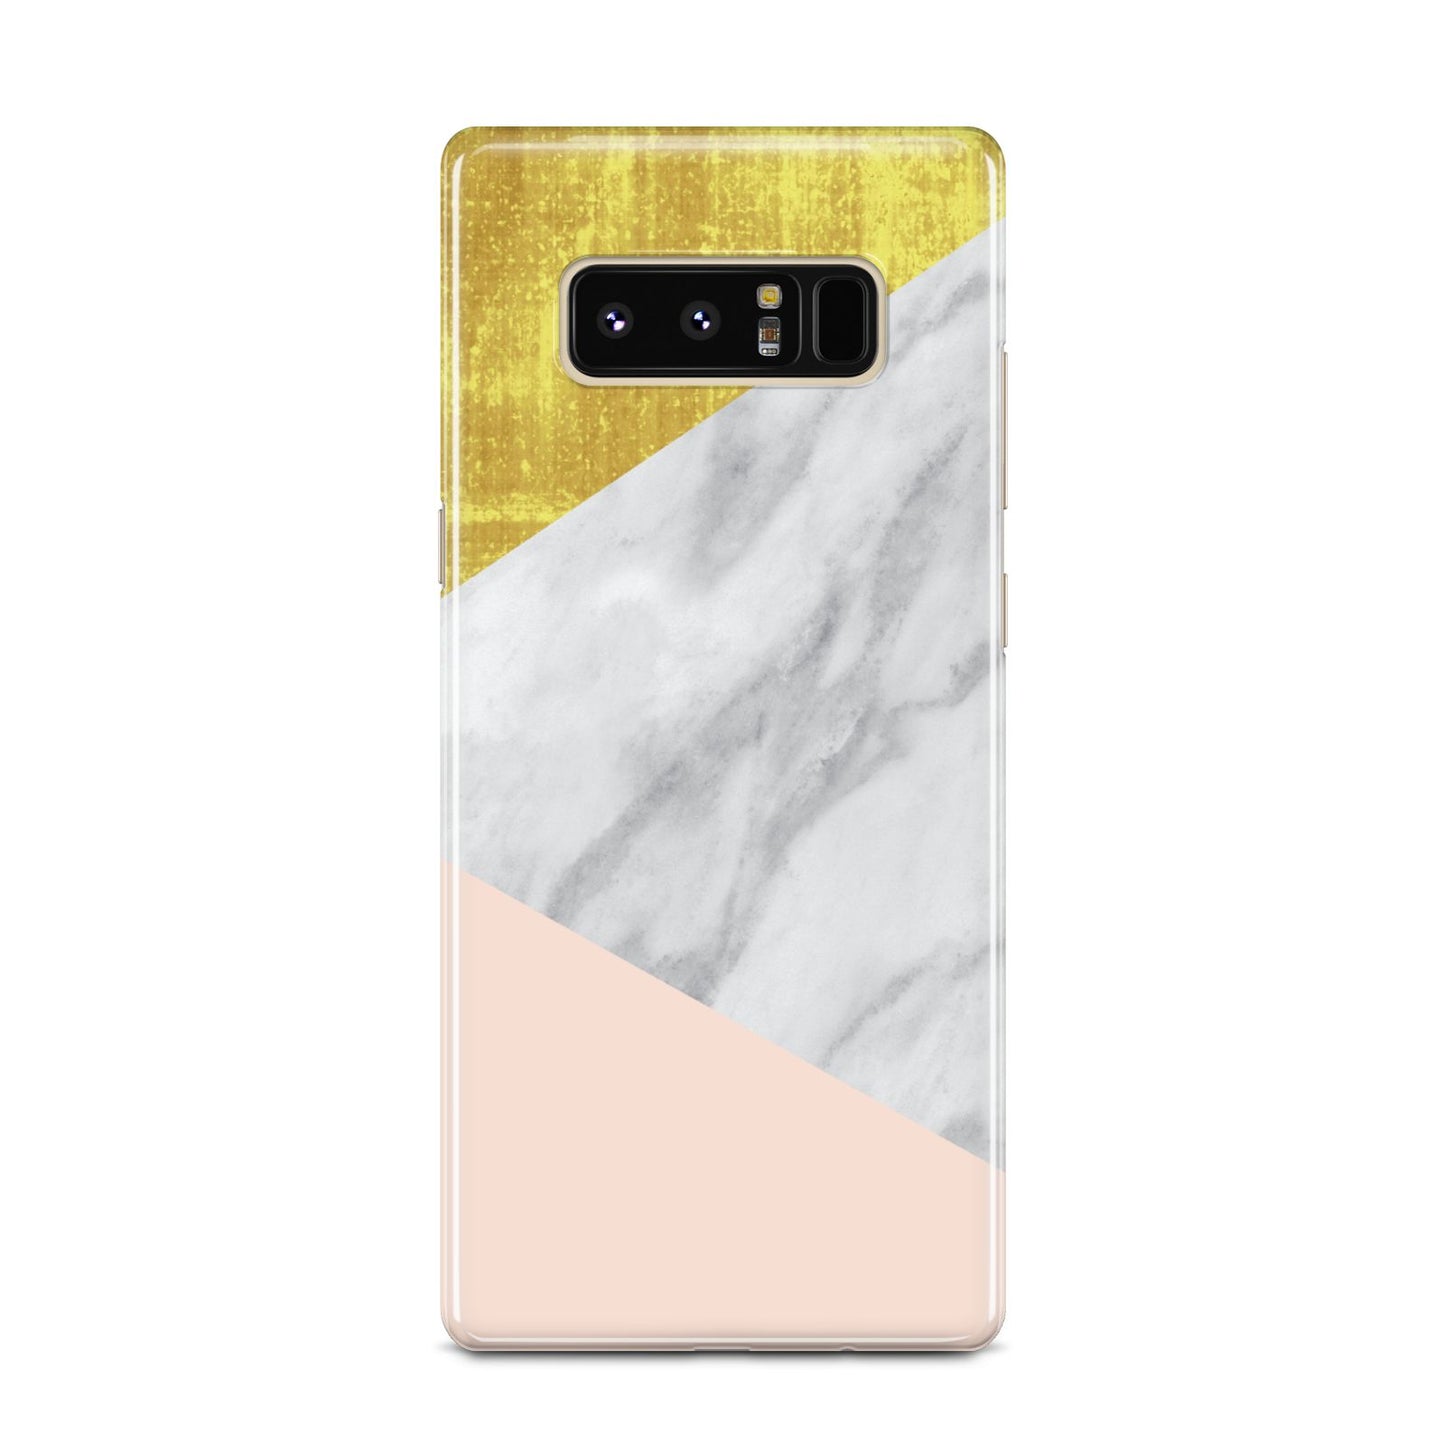 Marble White Gold Foil Peach Samsung Galaxy Note 8 Case